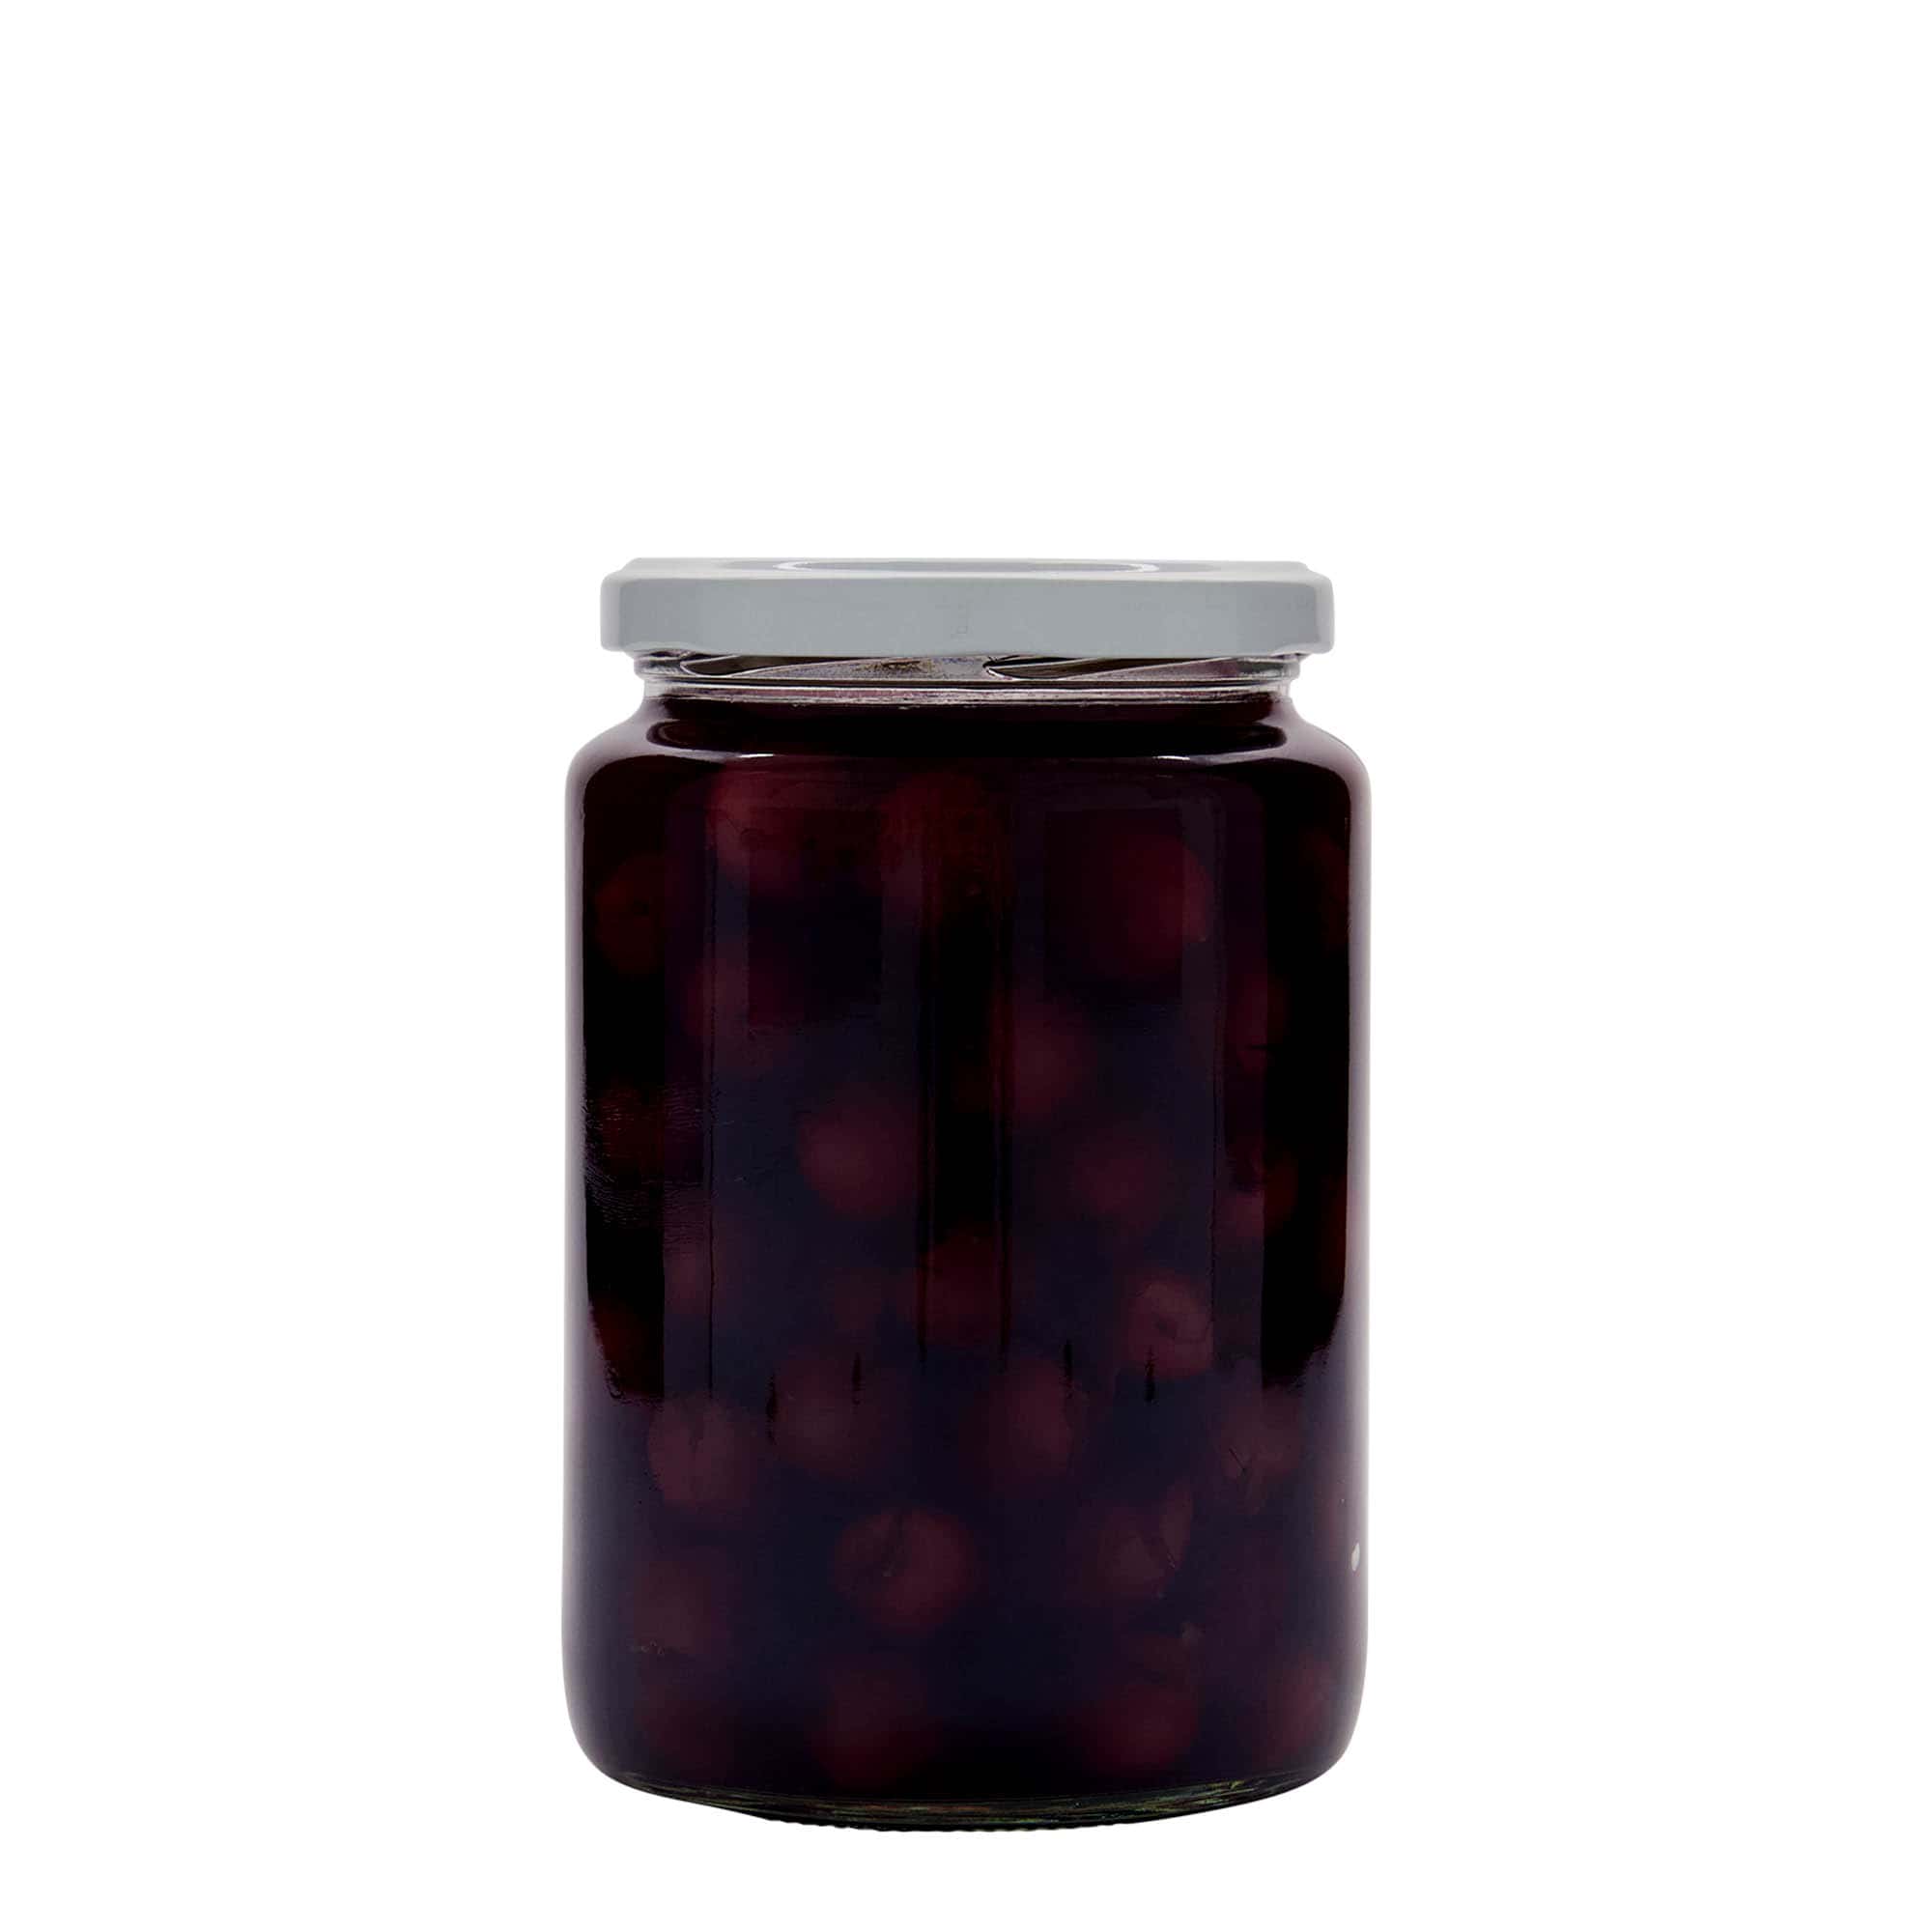 770 ml preserving jar, closure: twist off (TO 82)